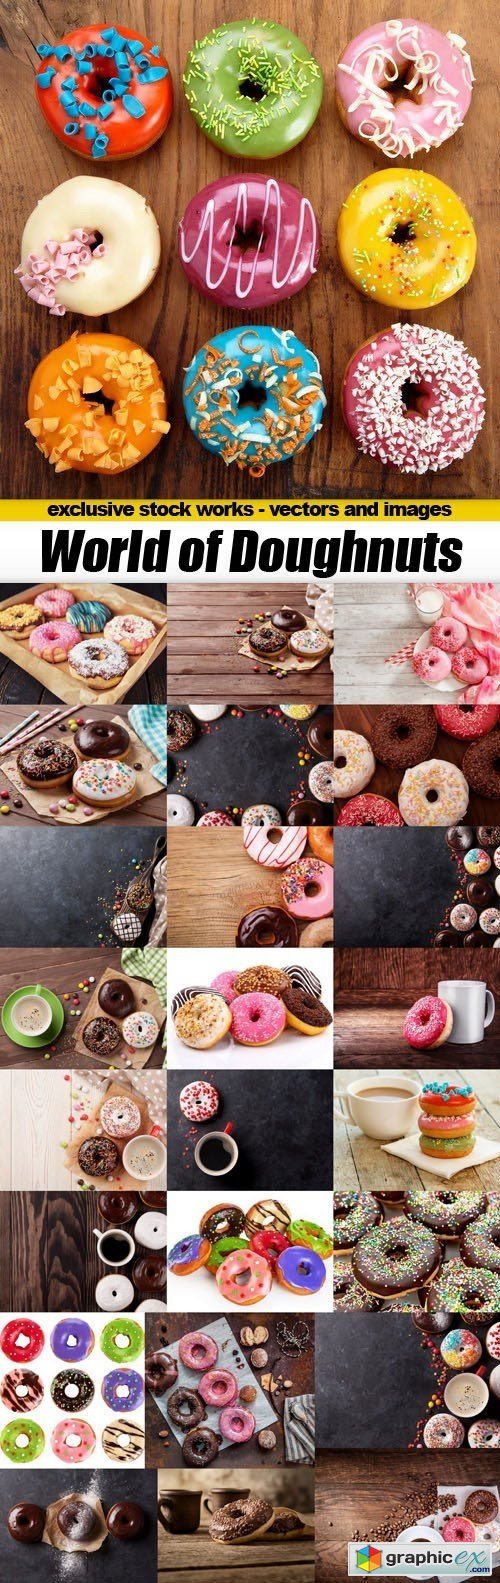 World of Doughnuts - 25xUHQ JPEG